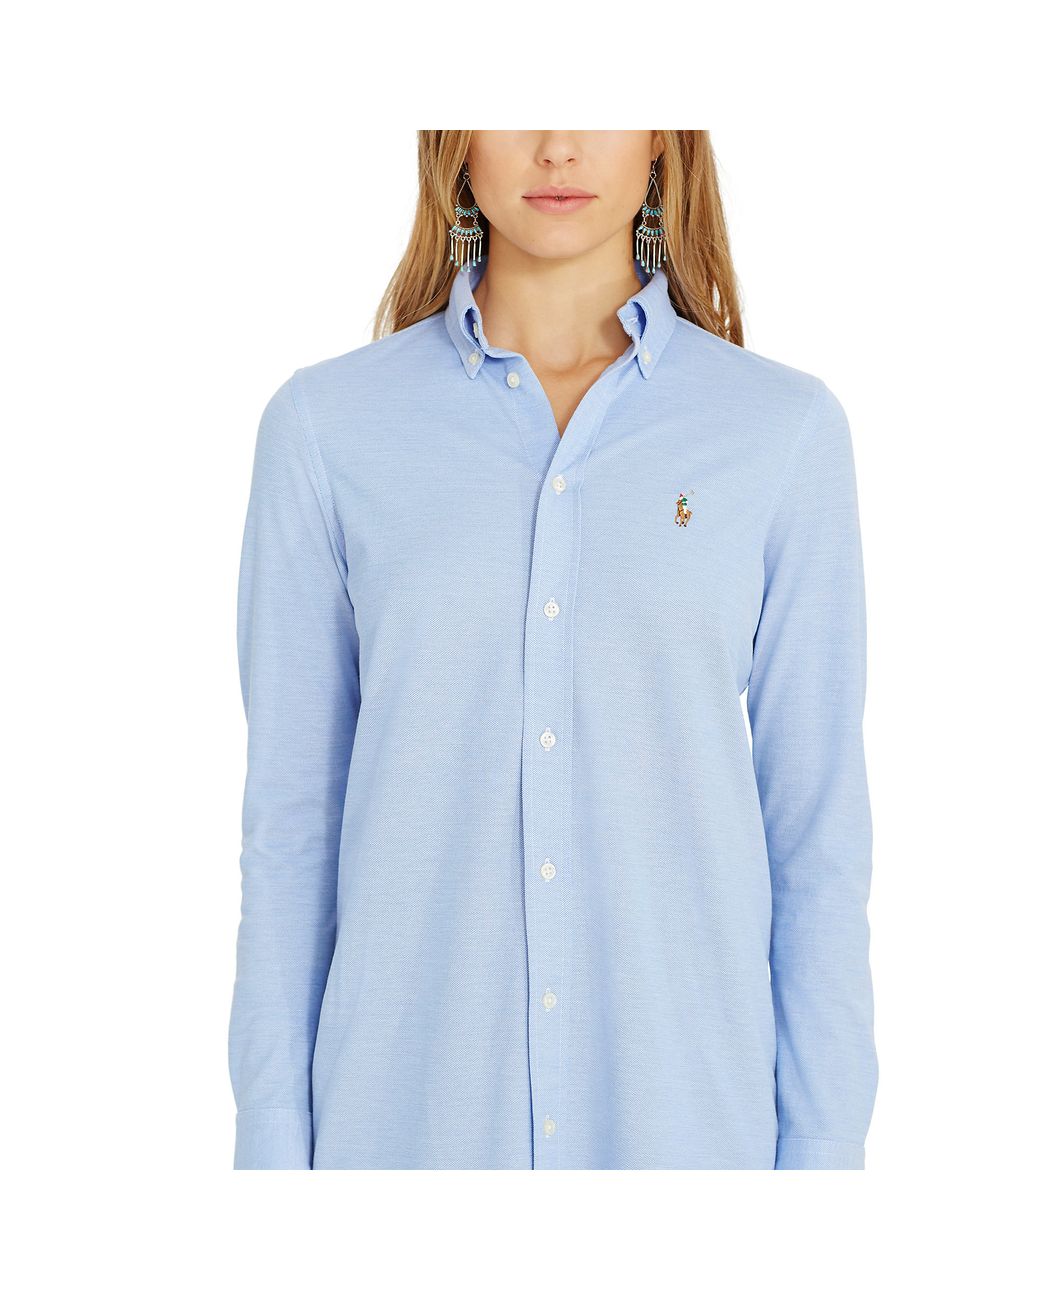 Polo Ralph Lauren Knit Oxford Shirtdress in Blue | Lyst